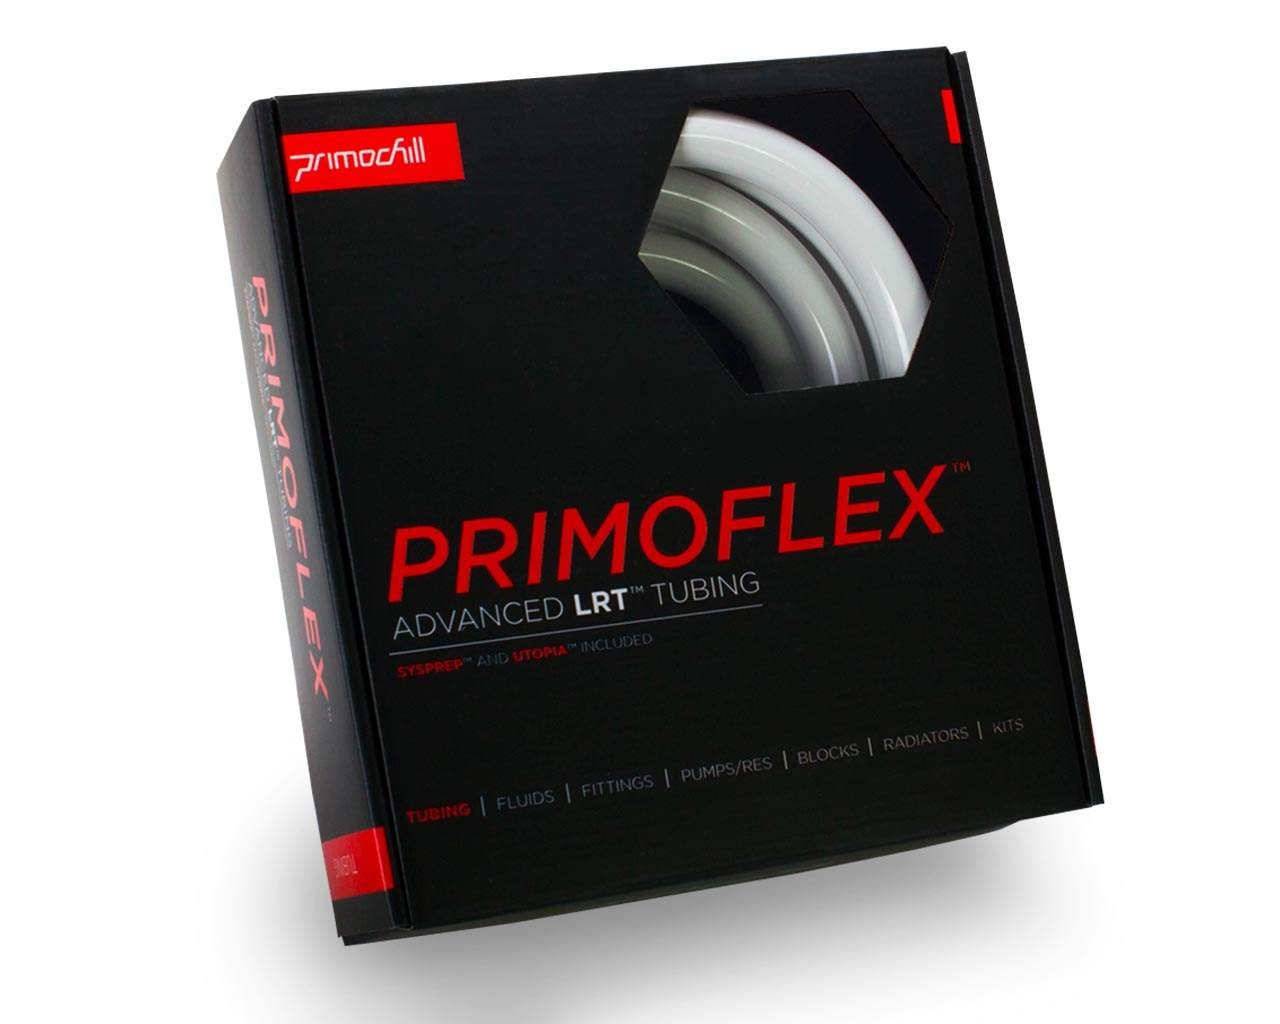 PrimoFlex Advanced LRT Soft Flexible Tubing - 7/16in.ID x 5/8in.OD, 10 feet - PrimoChill - KEEPING IT COOL Elegant White